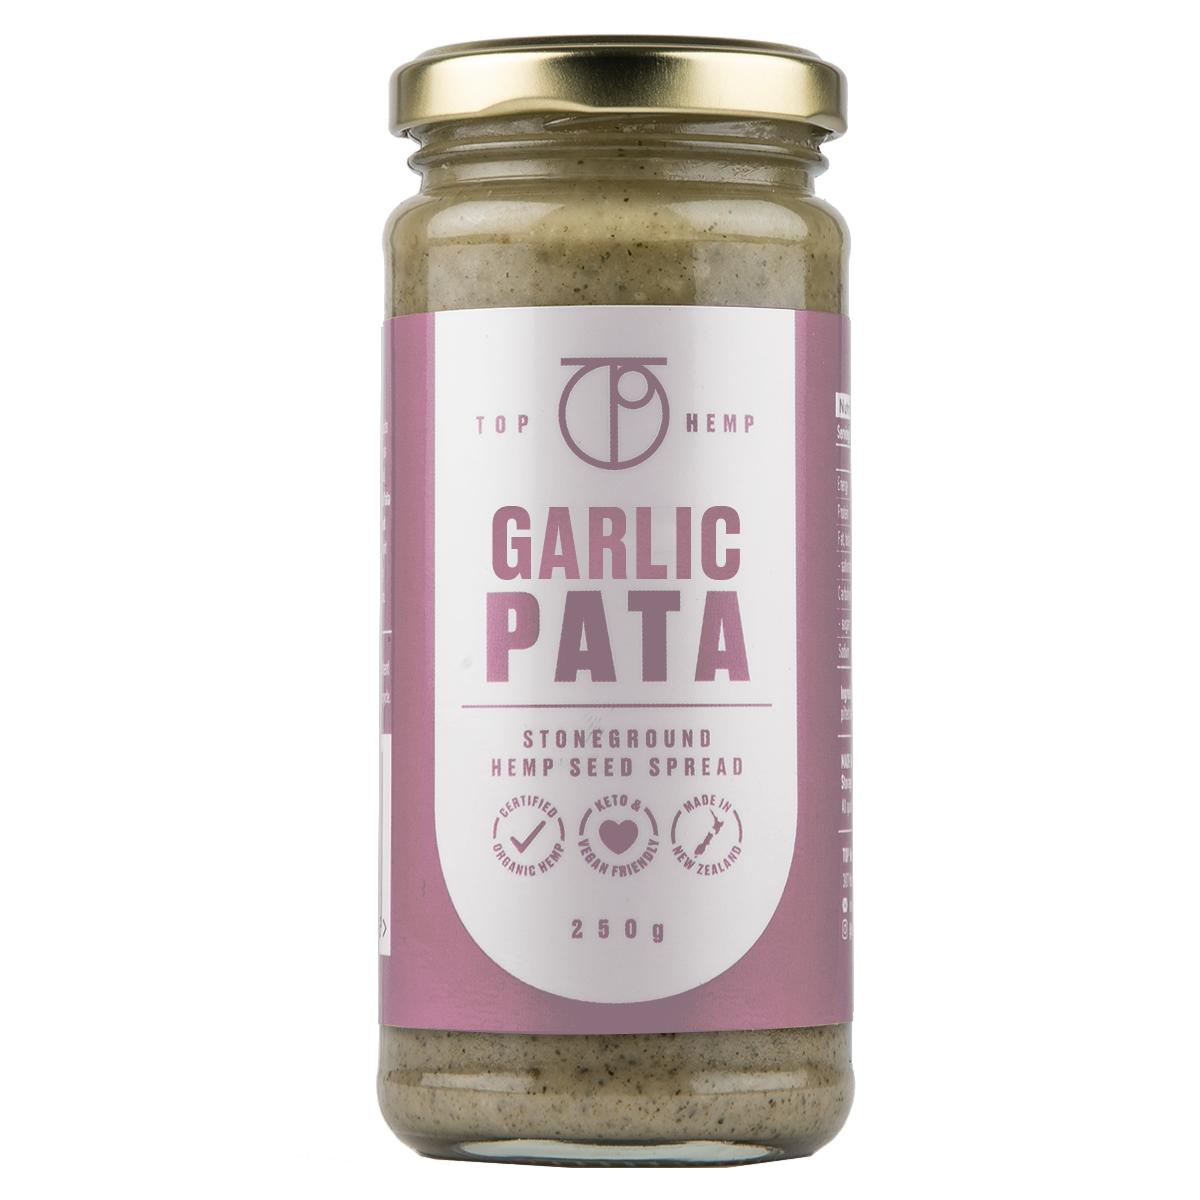 product image for TOP Hemp - Garlic Pata (stoneground hemp seed spread)